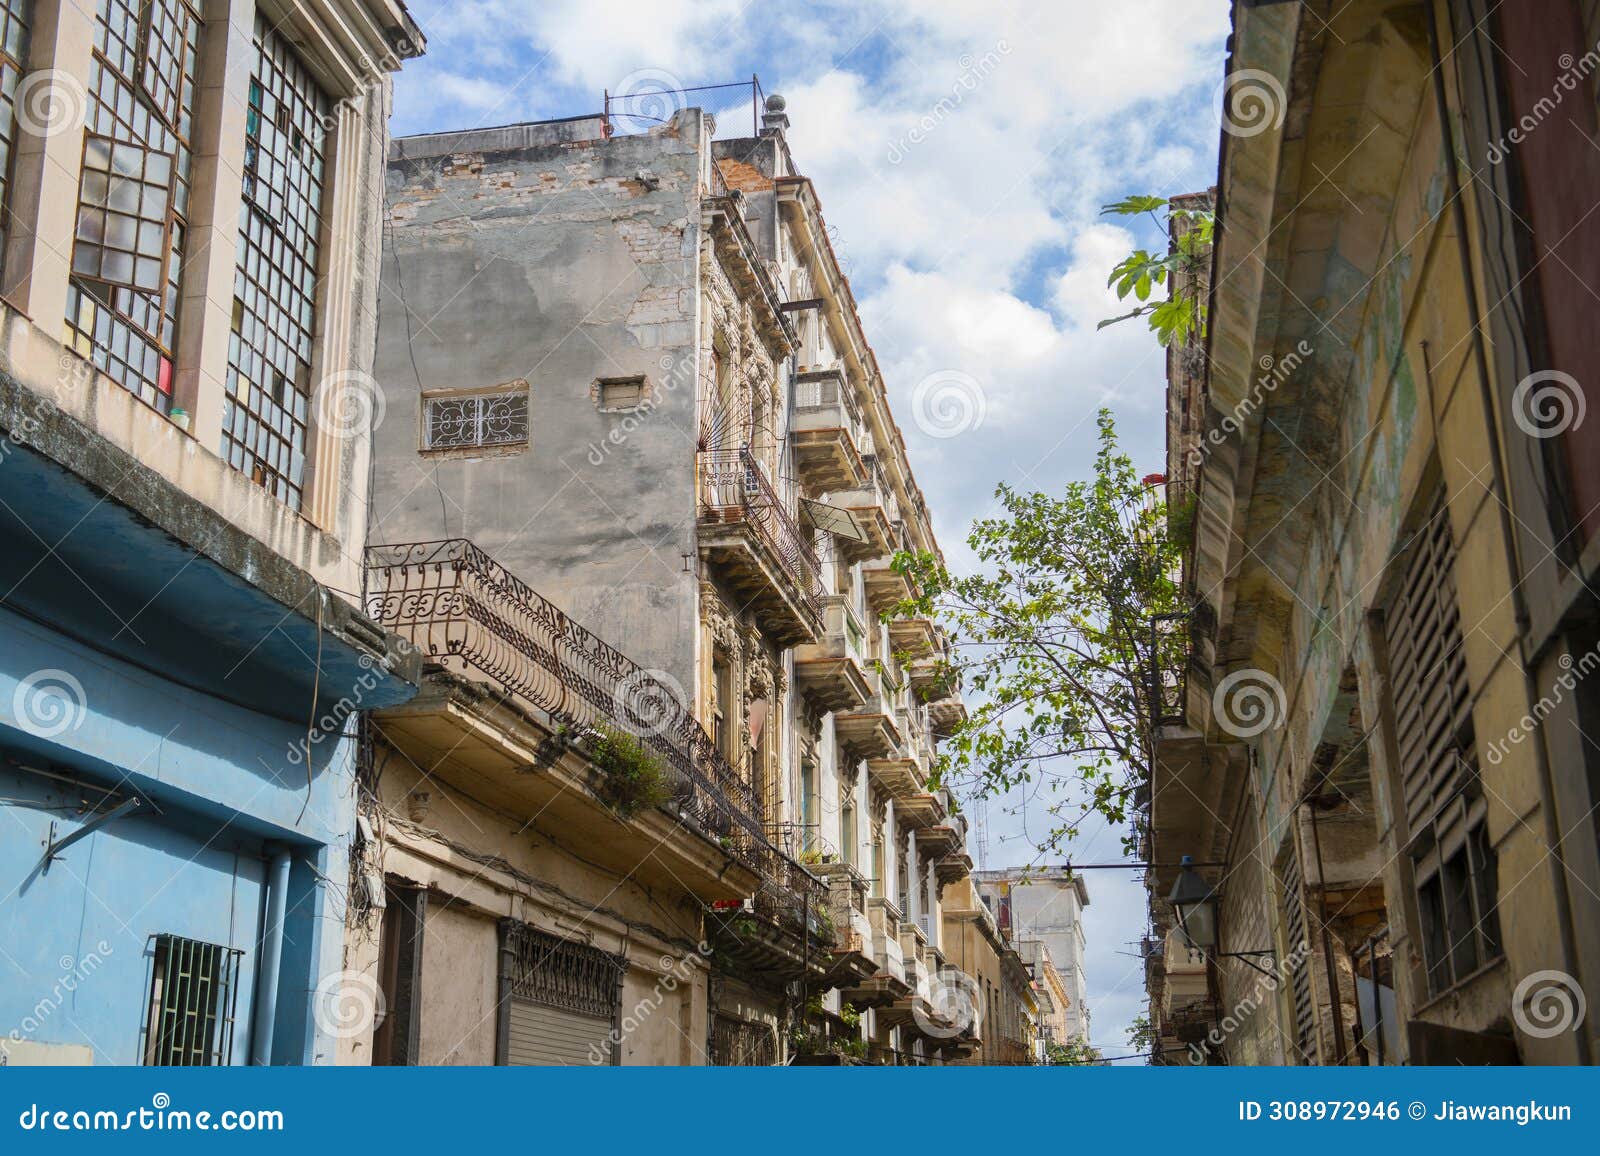 calle muralla street, old havana, havana, cuba